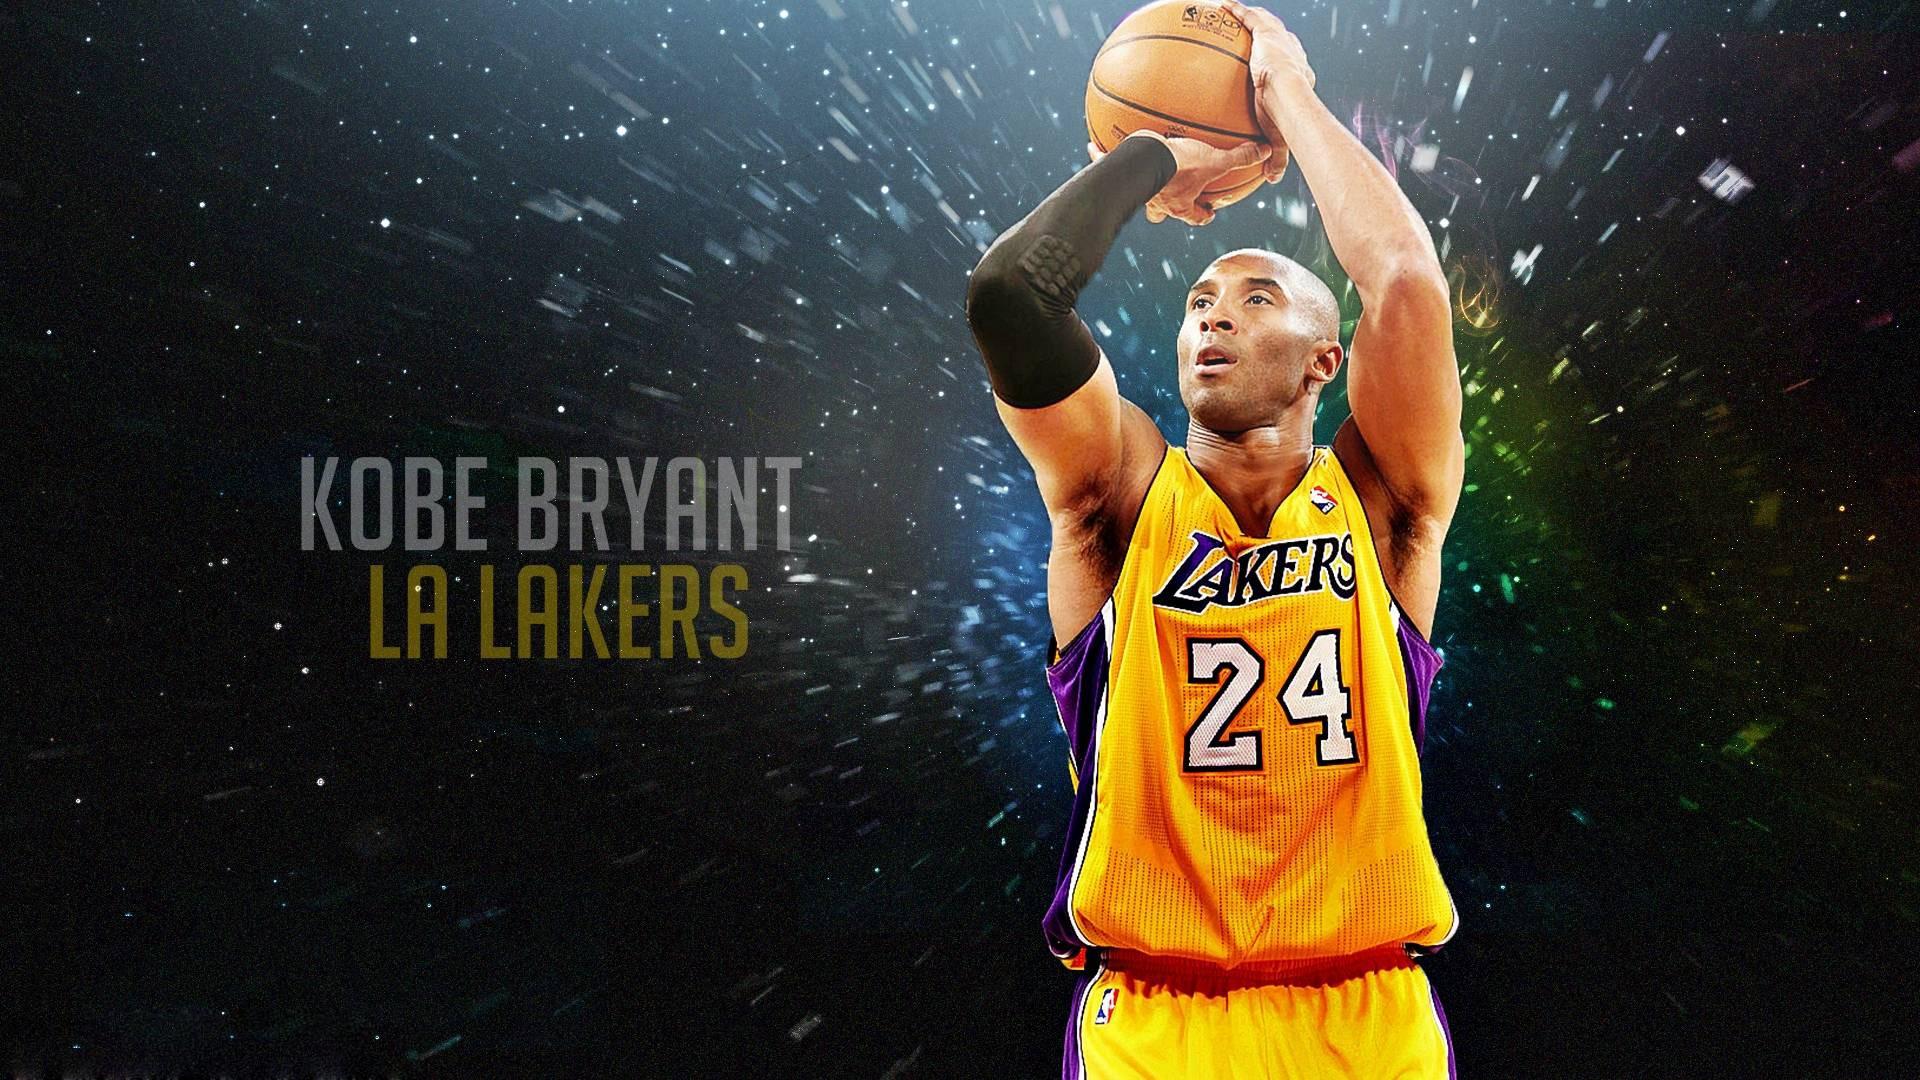 Free Kobe Bryant Wallpaper Basketball Desktop Image Bryant